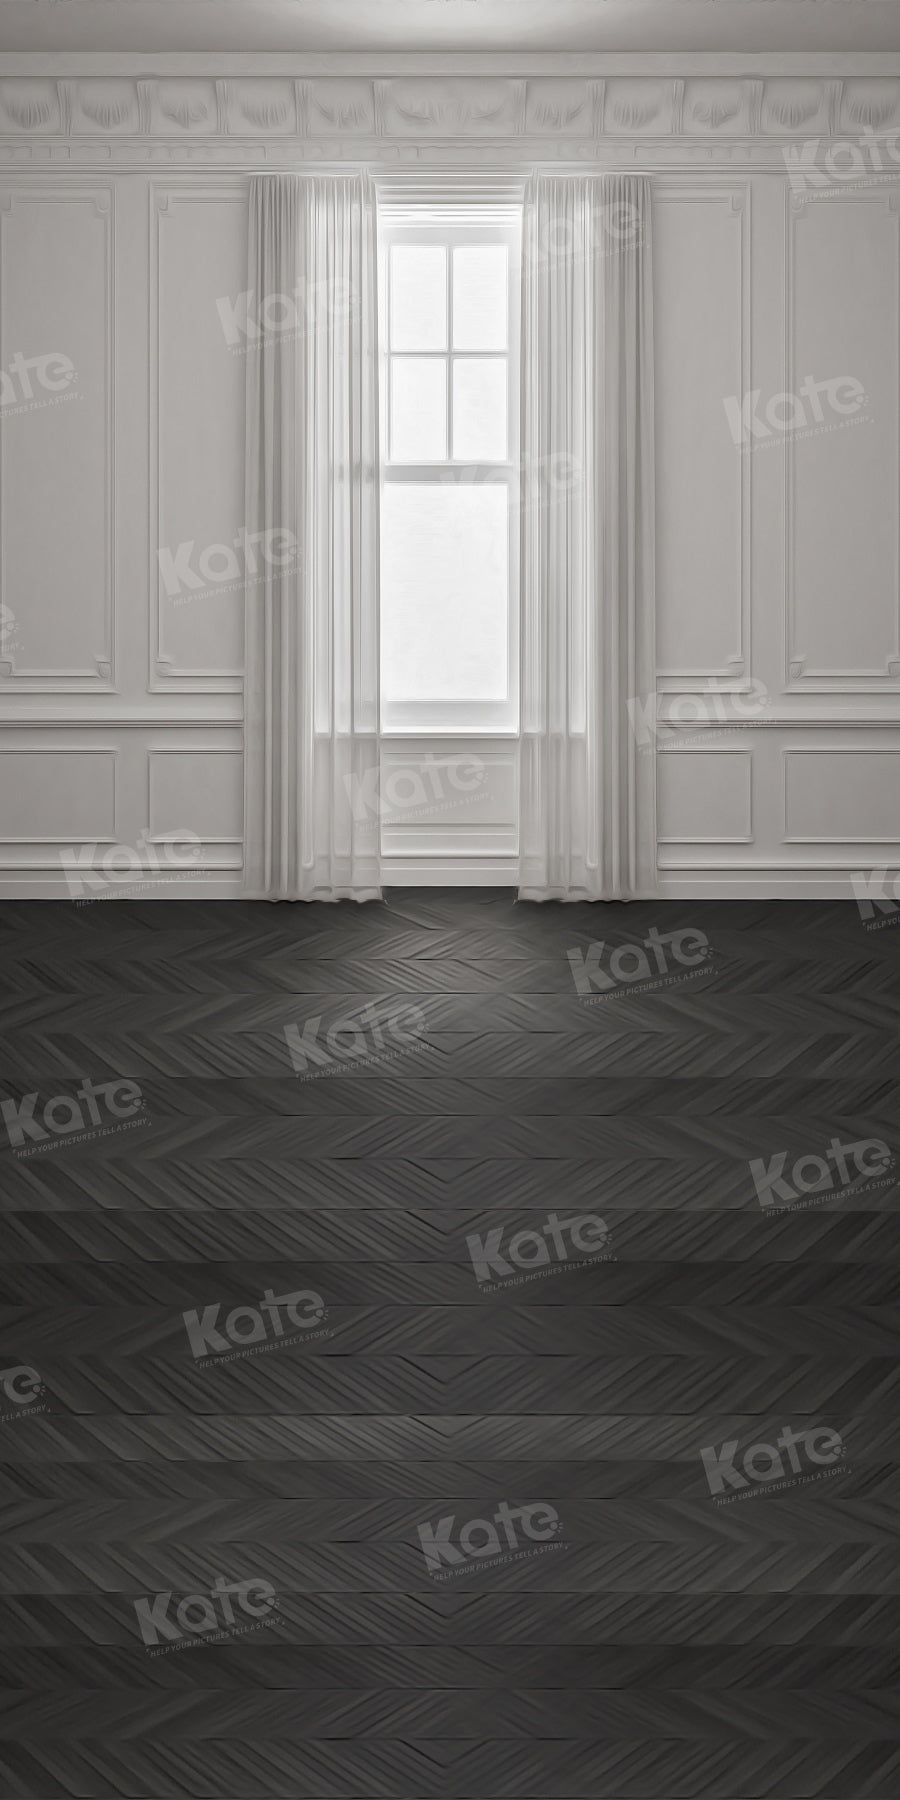 Kate Gray Retro Wall Window Dark Wood Floor Backdrop for Photography